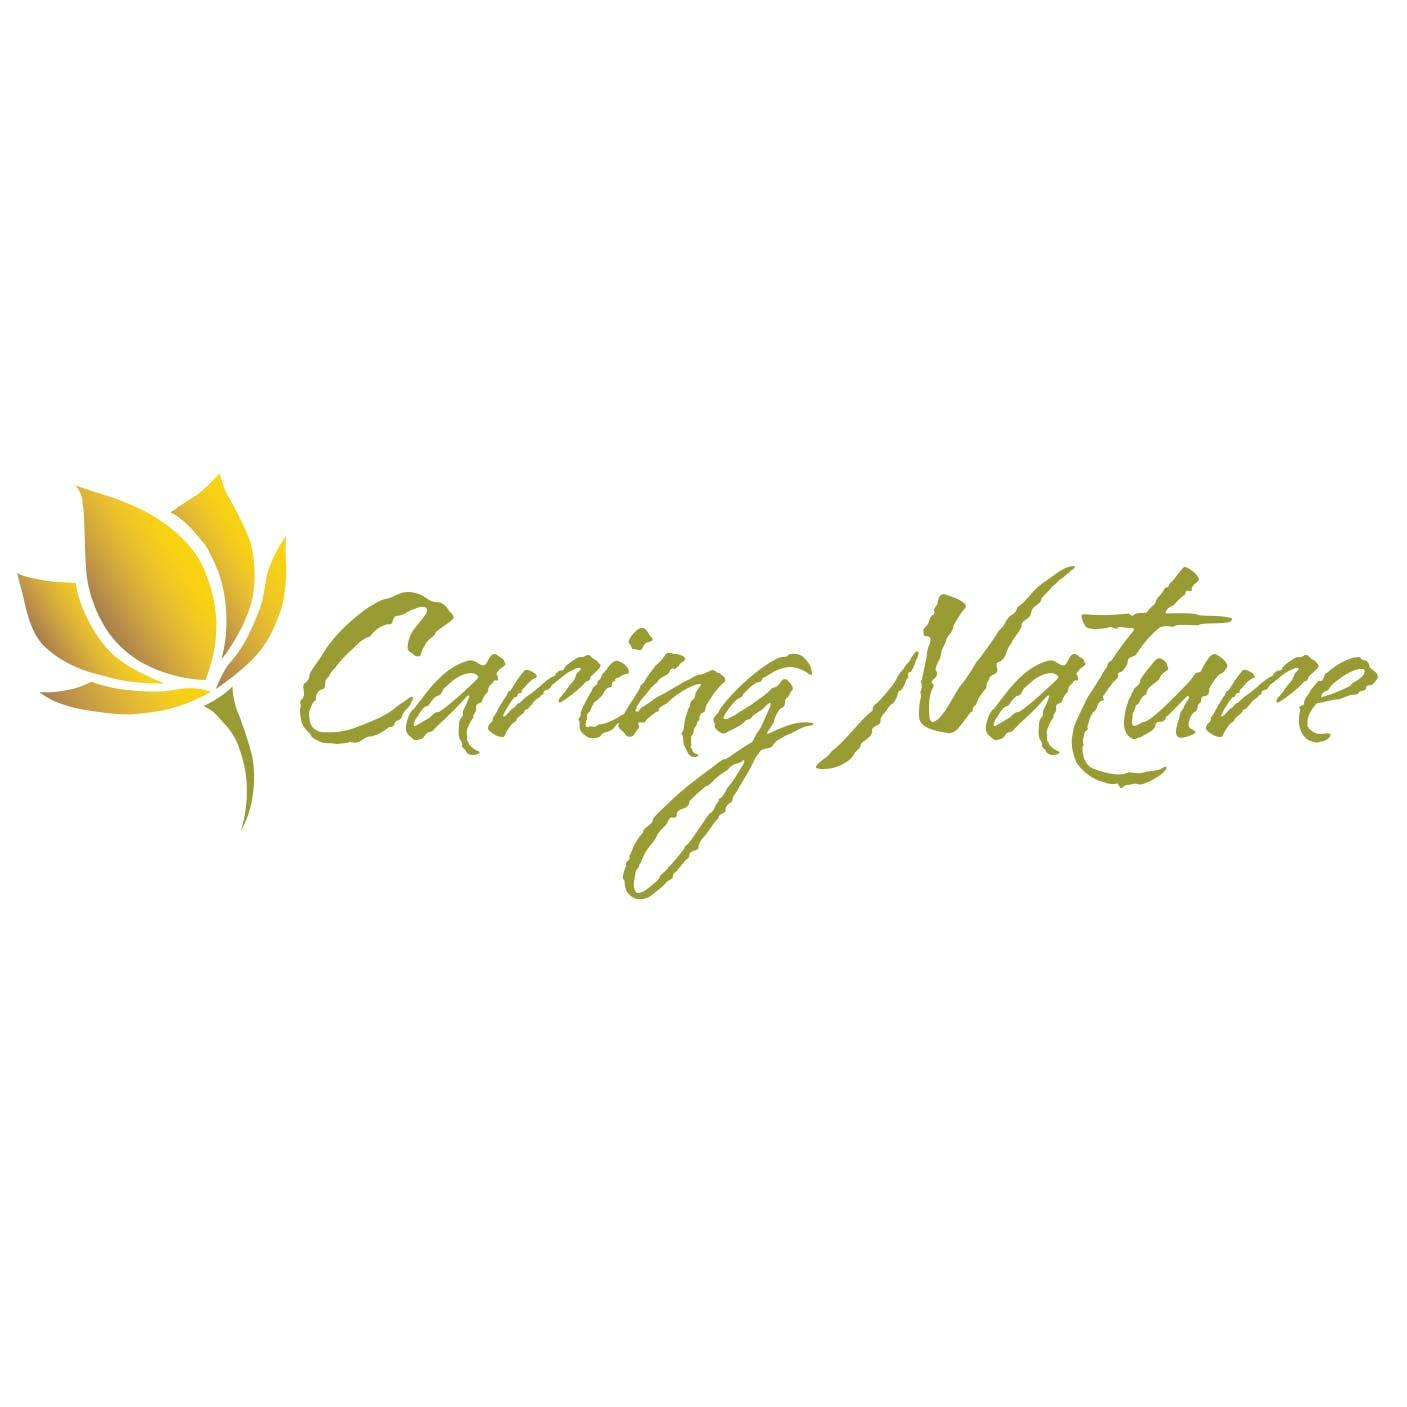 Caring Nature